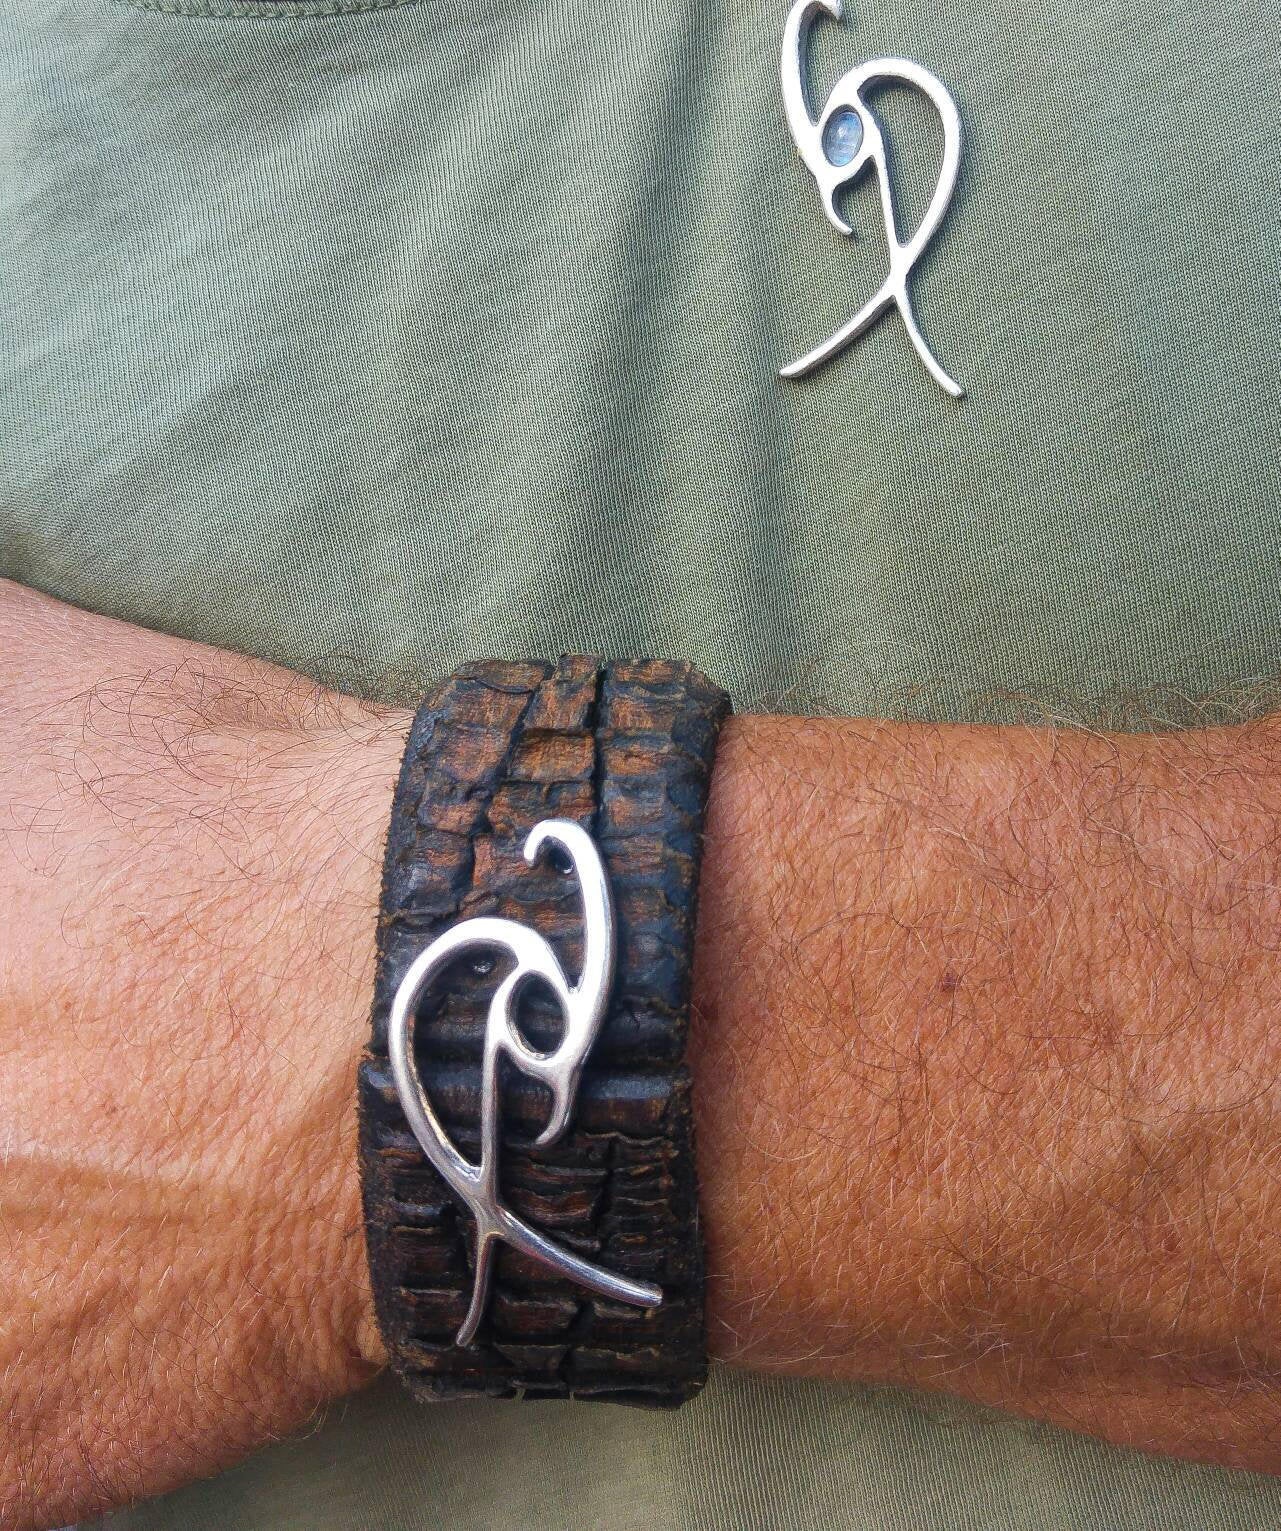 Alligator bracelet with original silver ishaor clasp logo